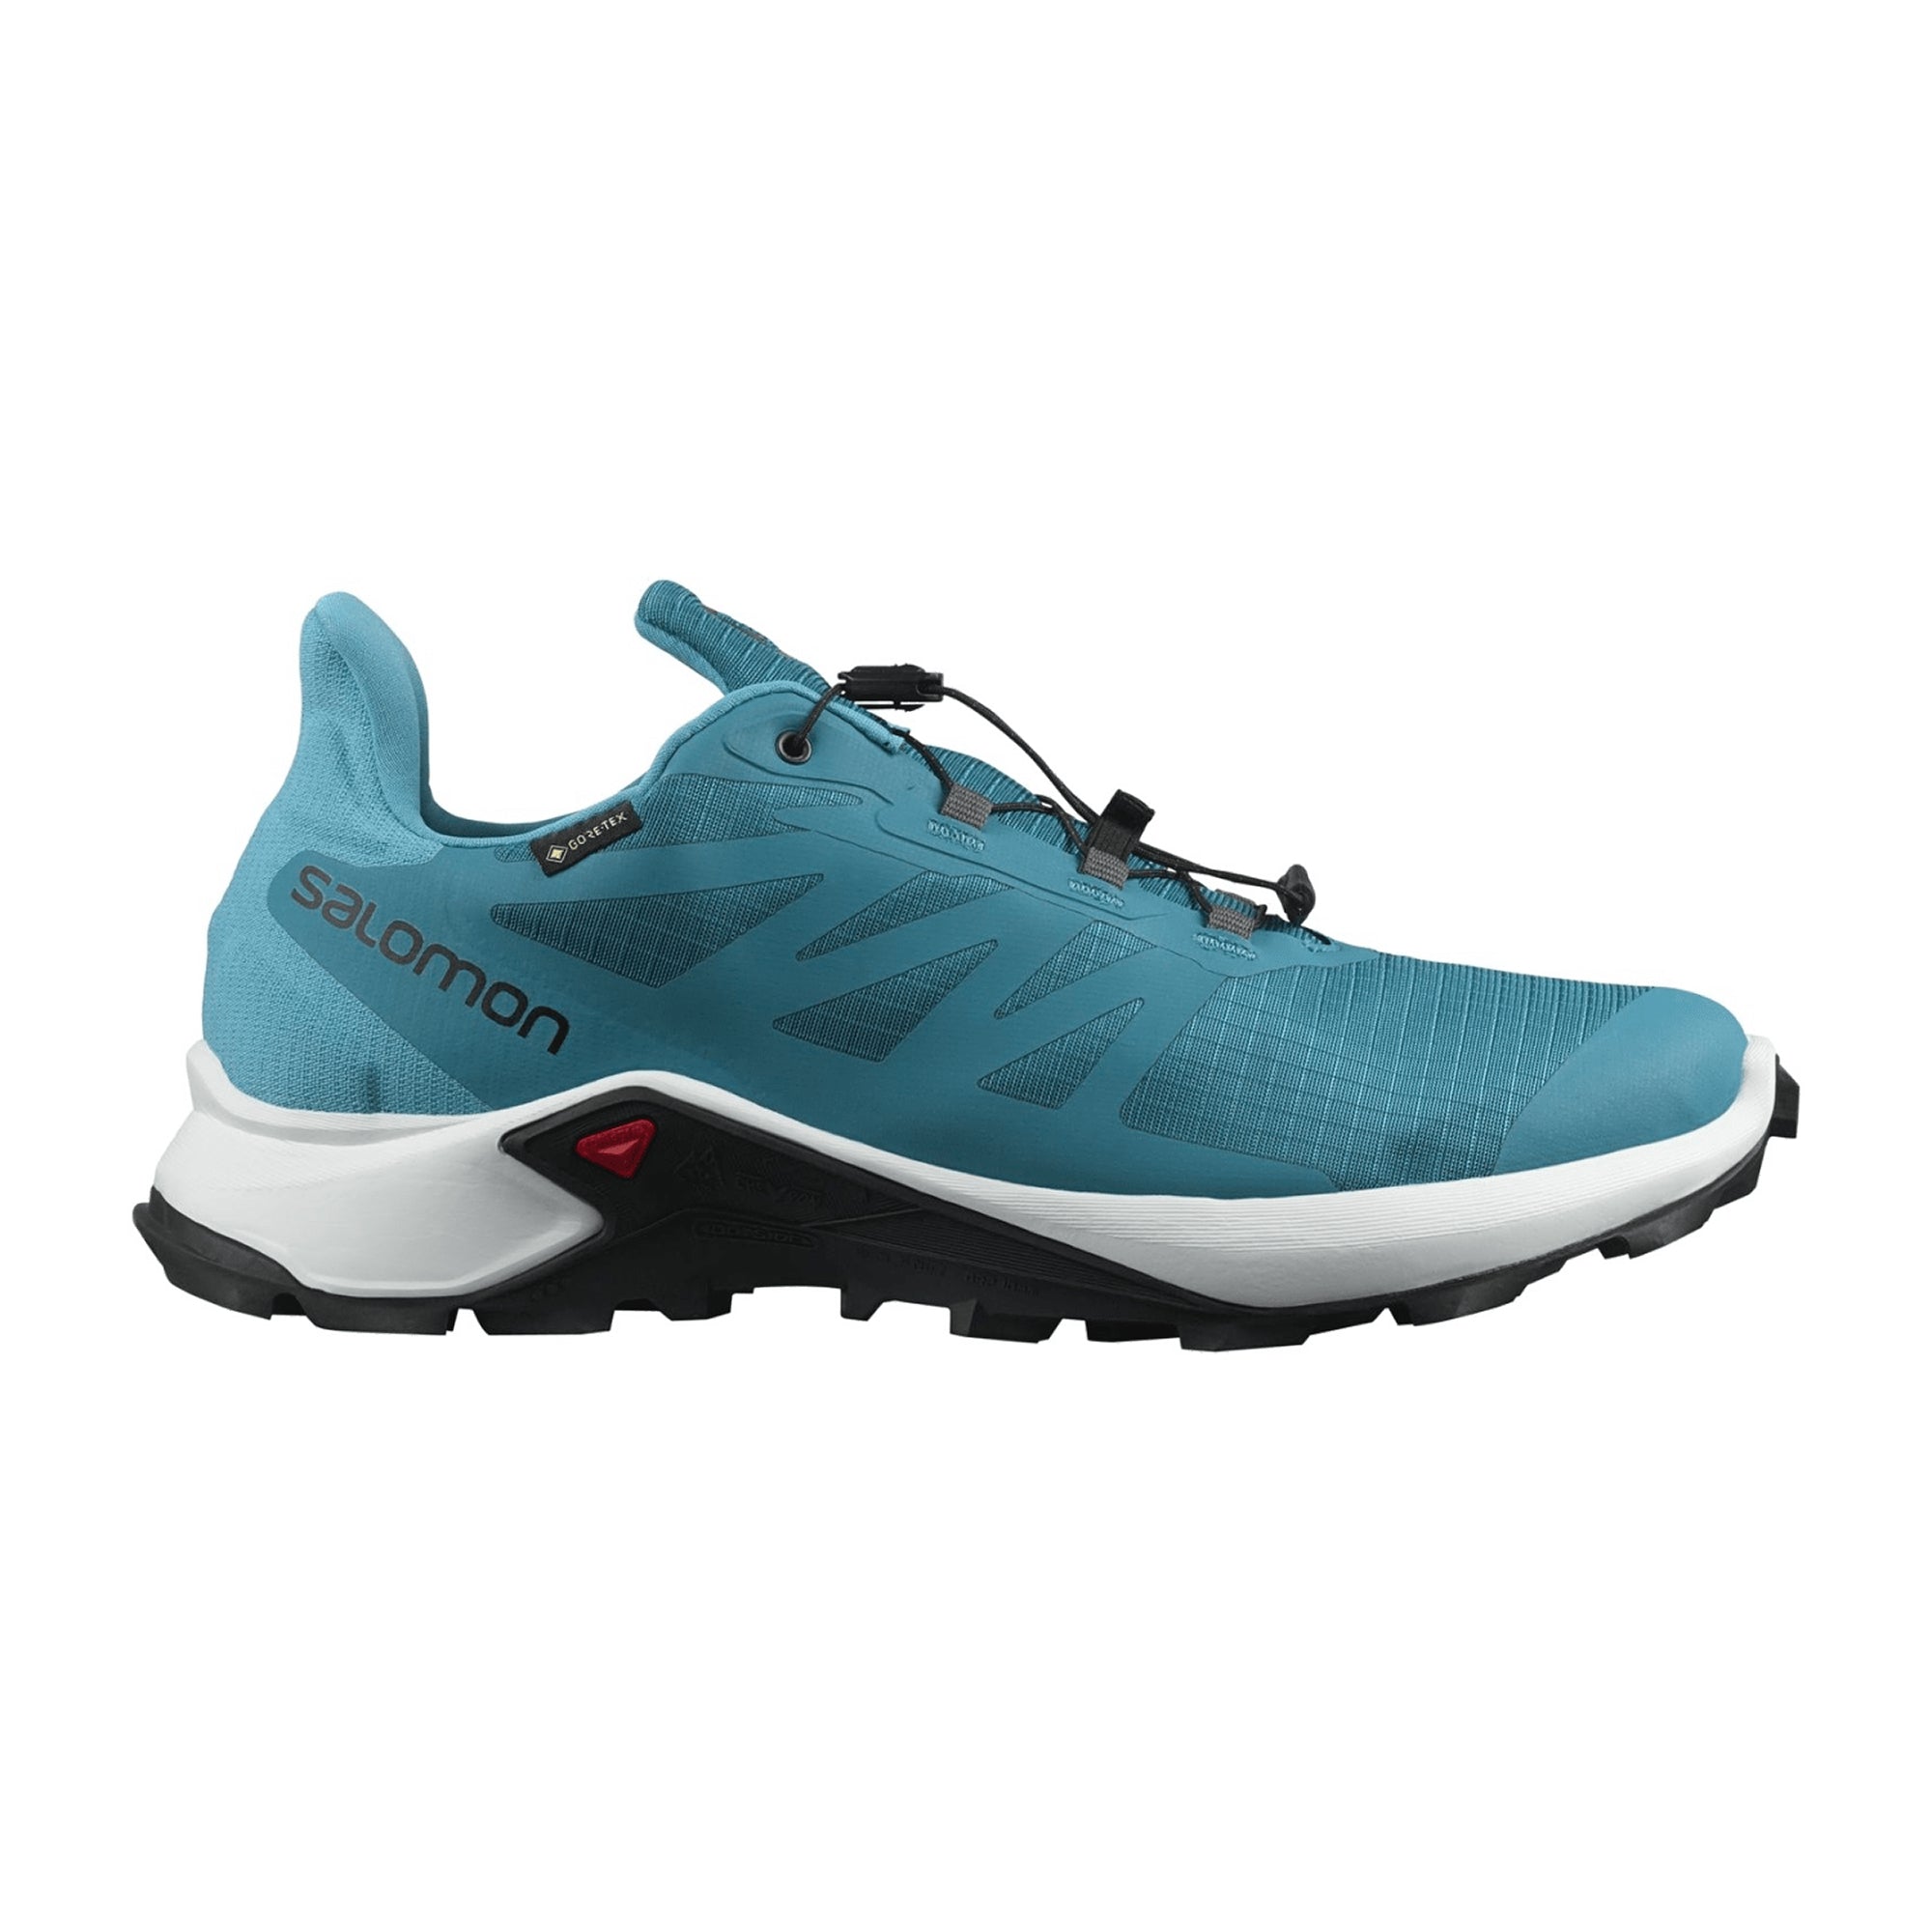 Salomon Supercross 3 GTX for men, turquoise, shoes